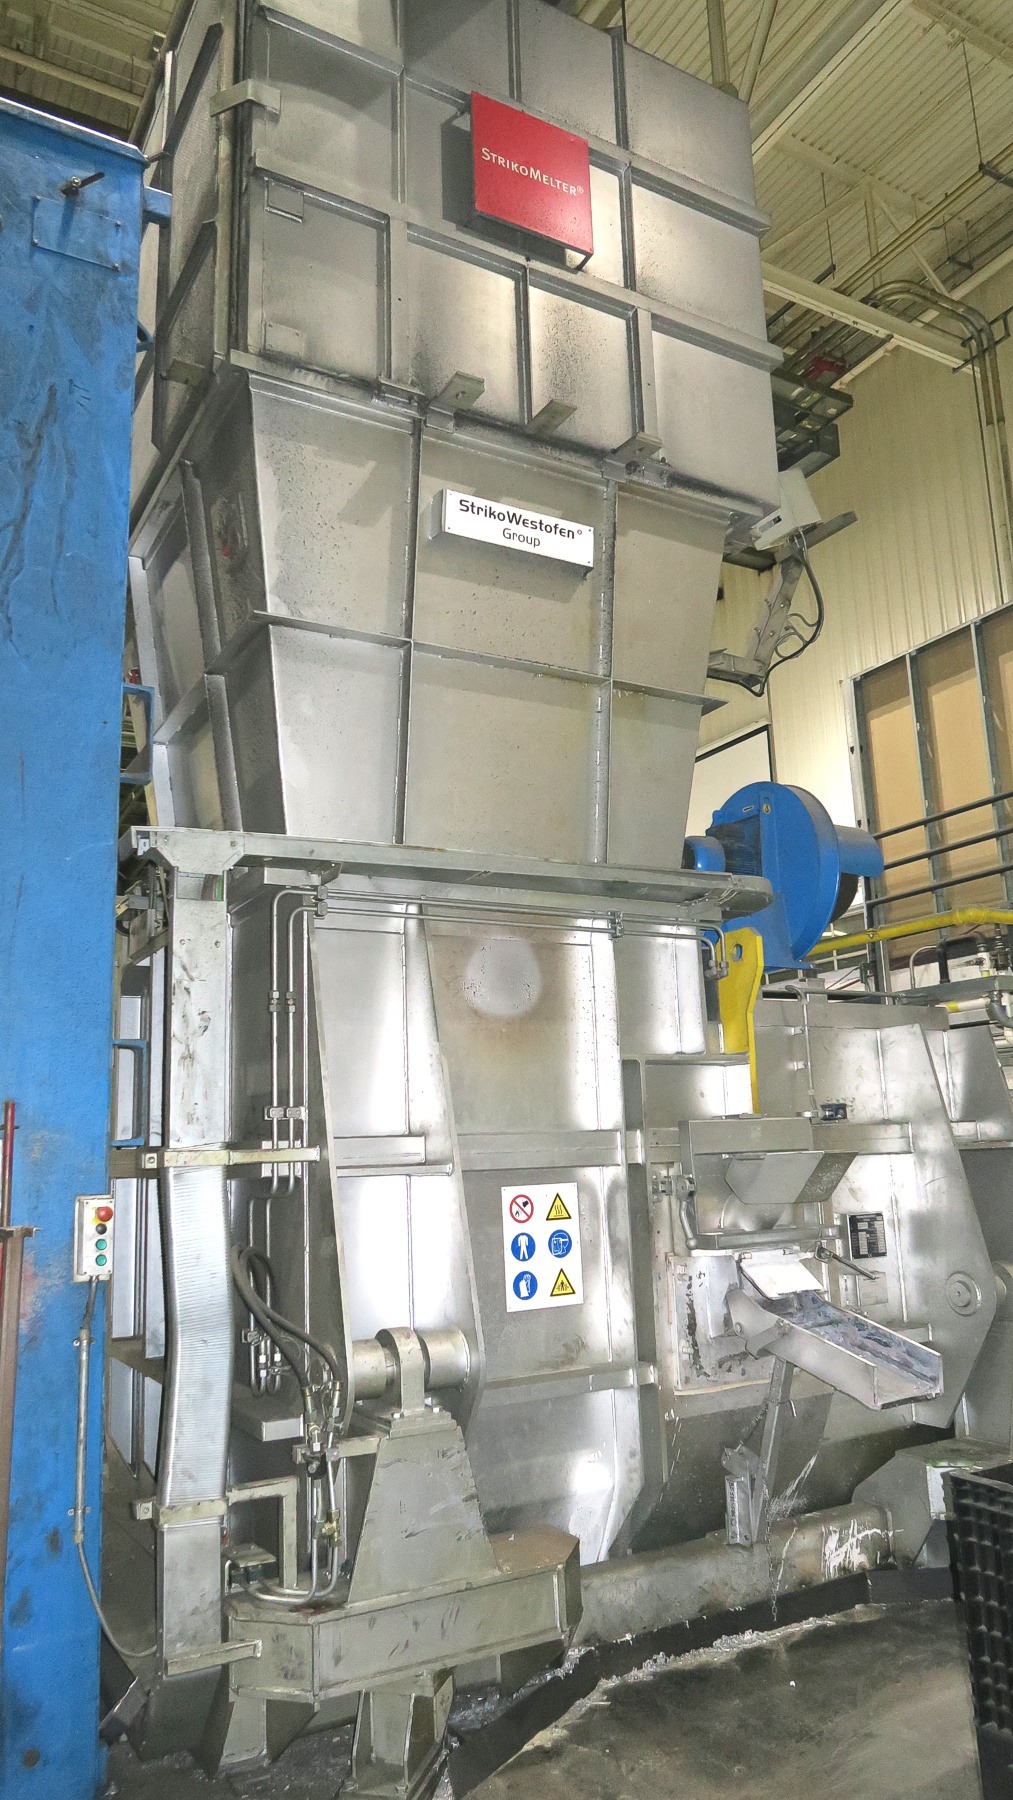 Detailed image of Used Striko Westofen Gas Melting and Holding Furnace